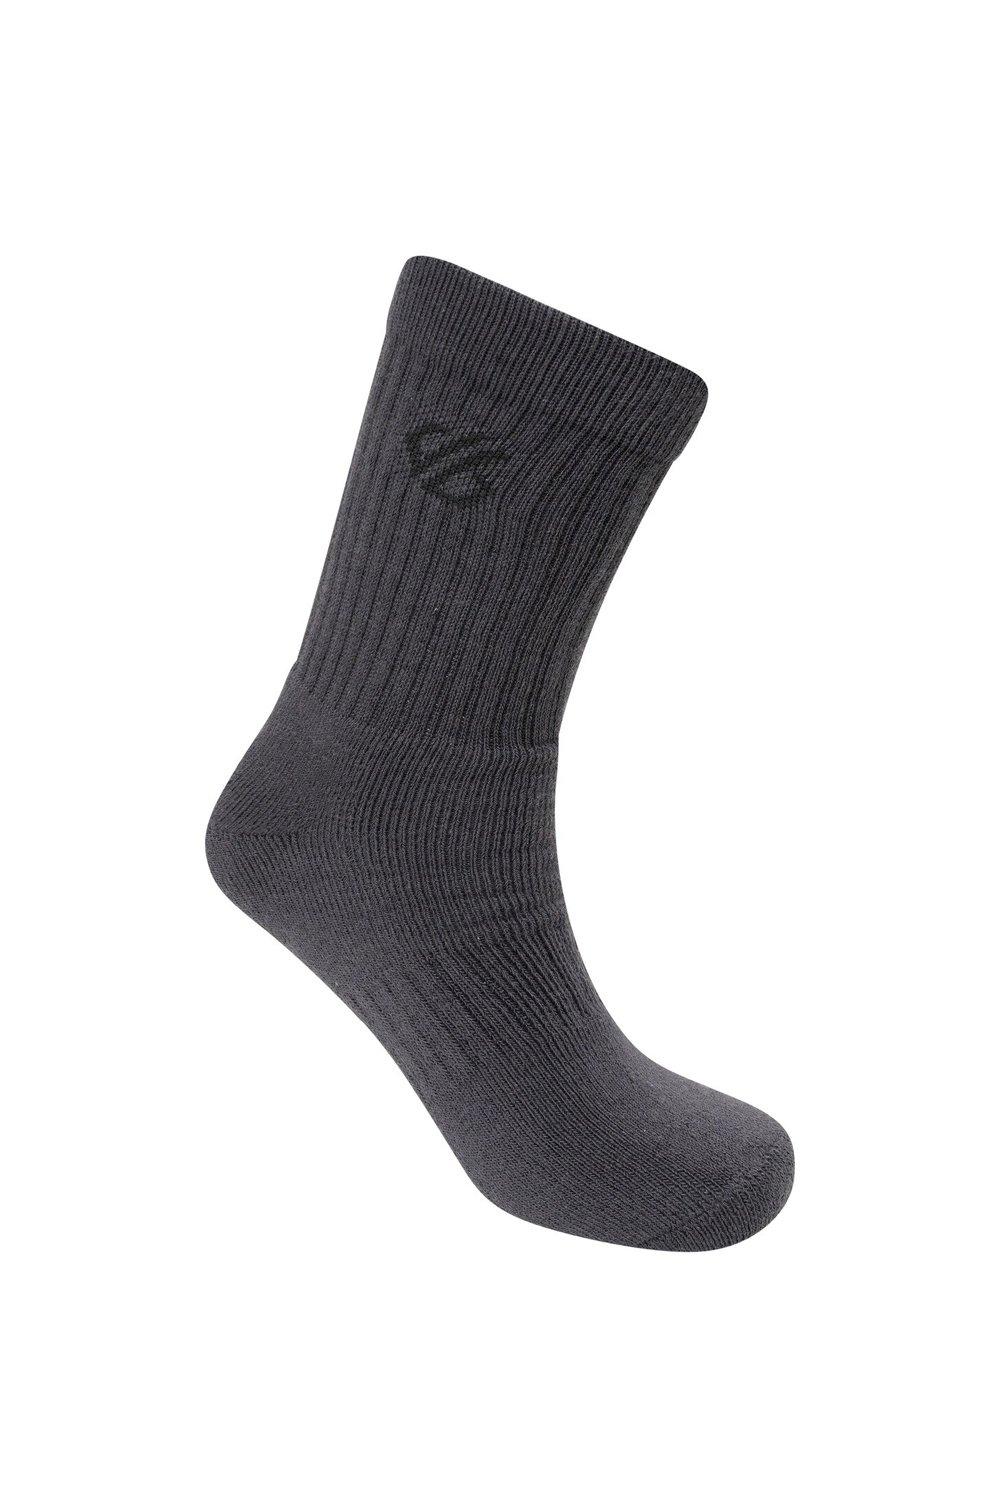 'Essentials' 2 Pack Cotton Blend Ankle Socks